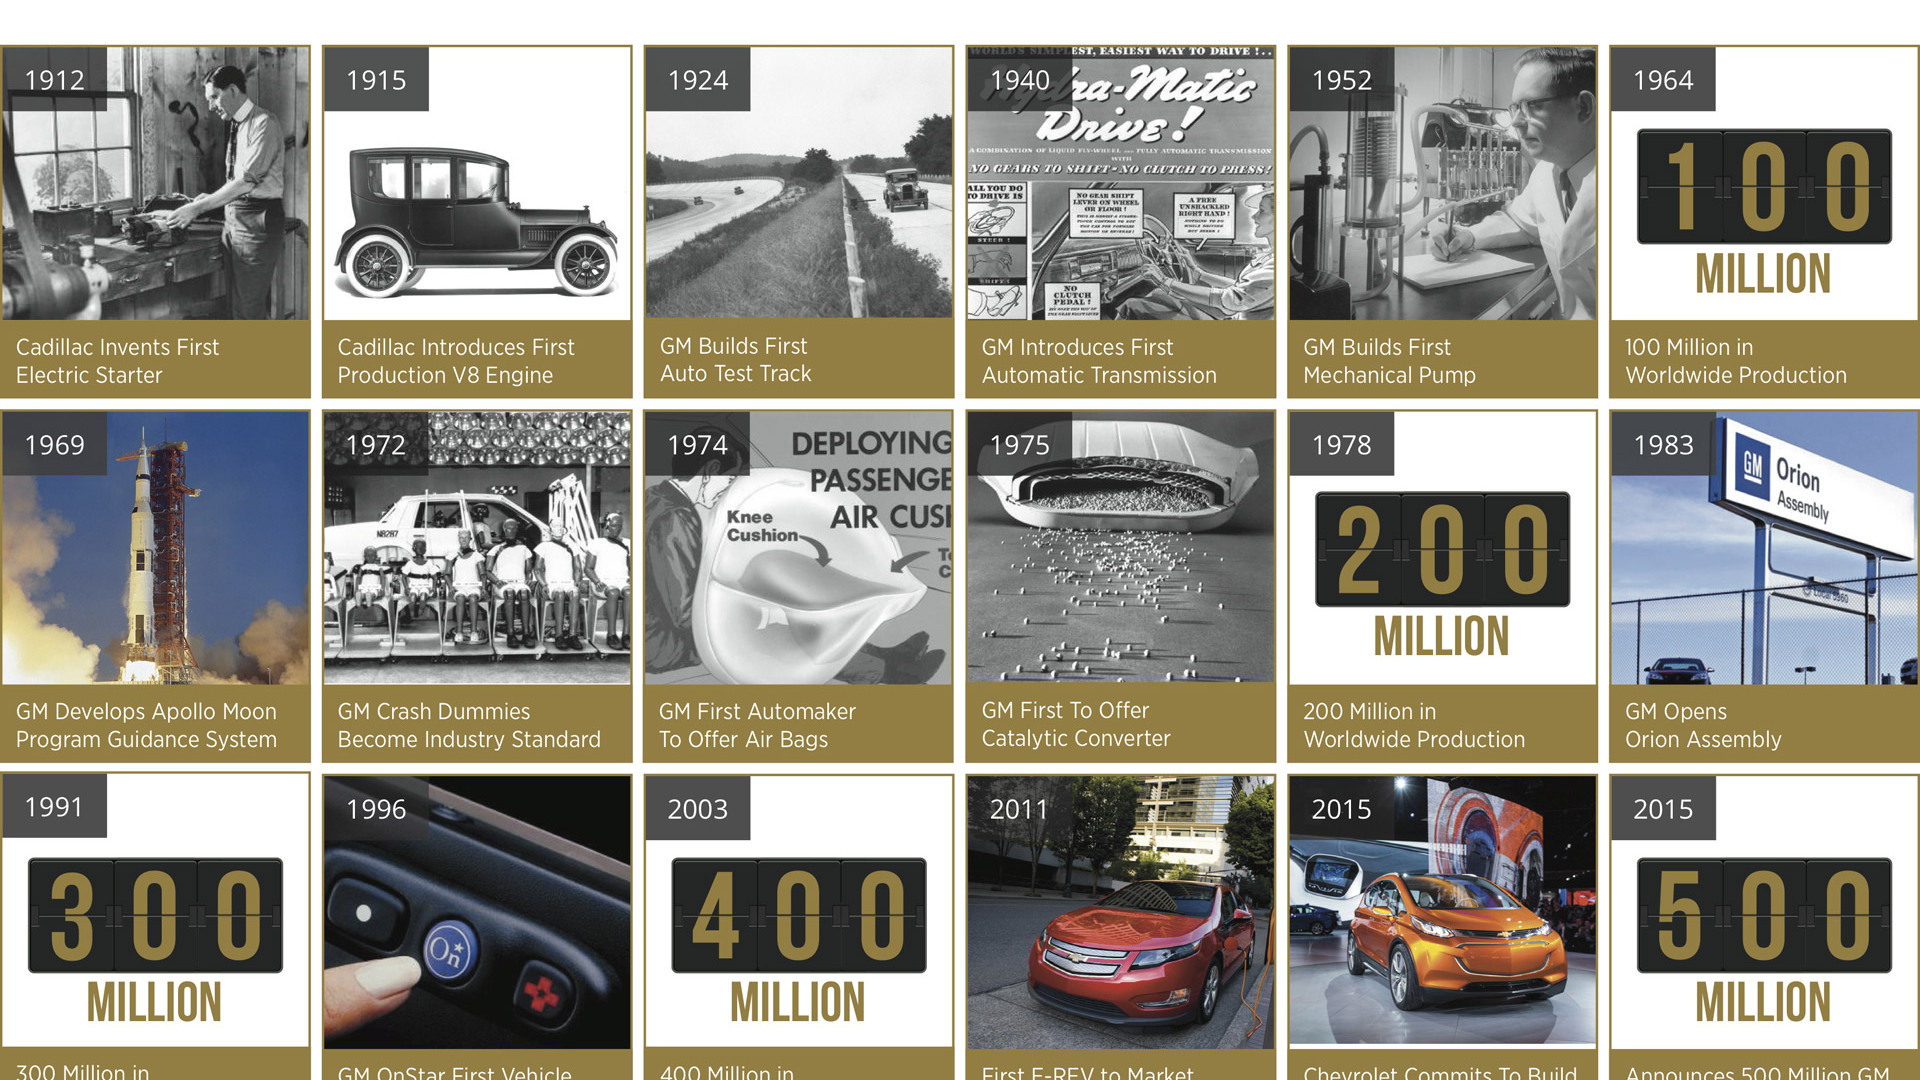 GM celebrates building its 500 millionth vehicle